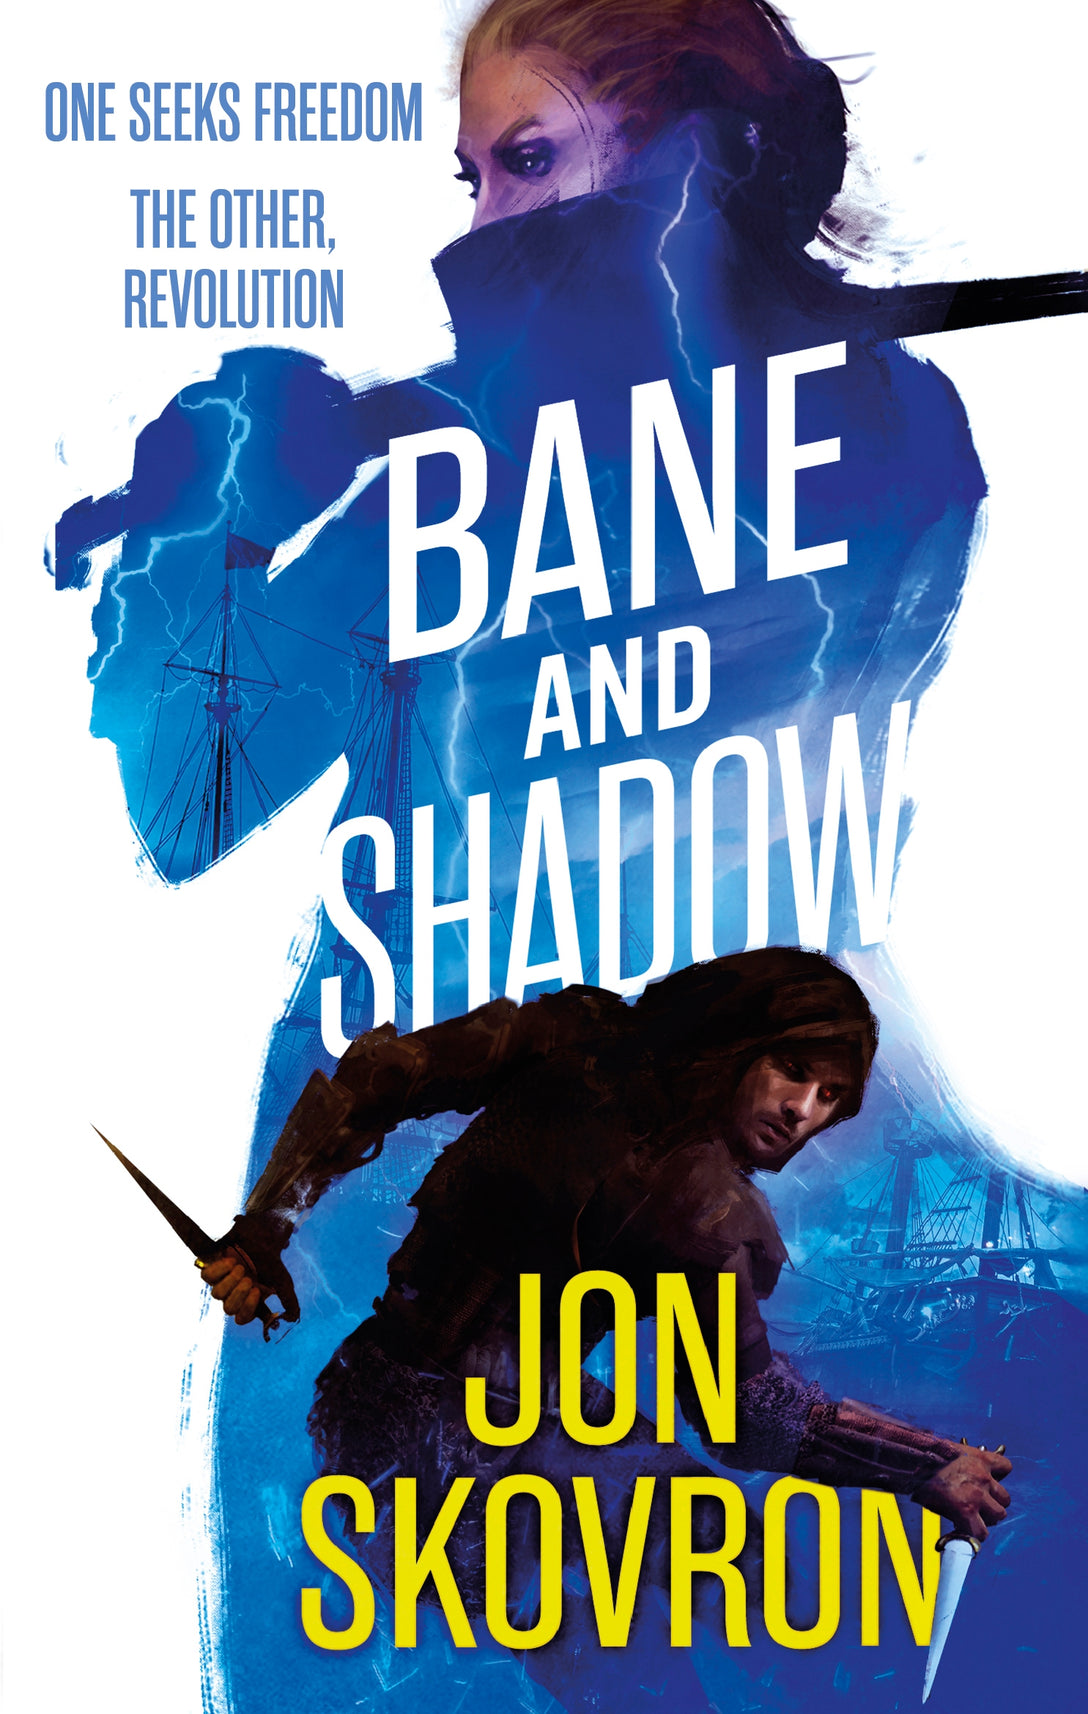 Bane and Shadow by Jon Skovron